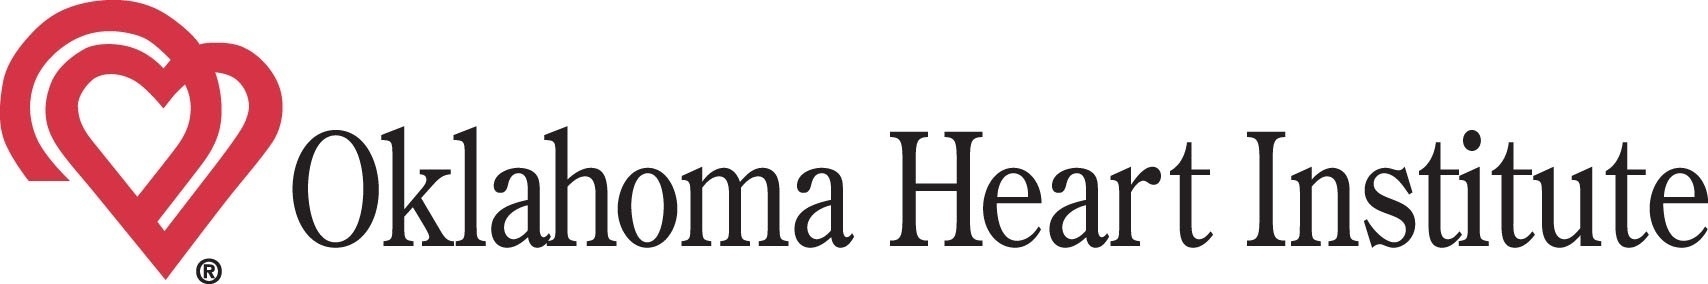 Oklahoma Heart Institute logo